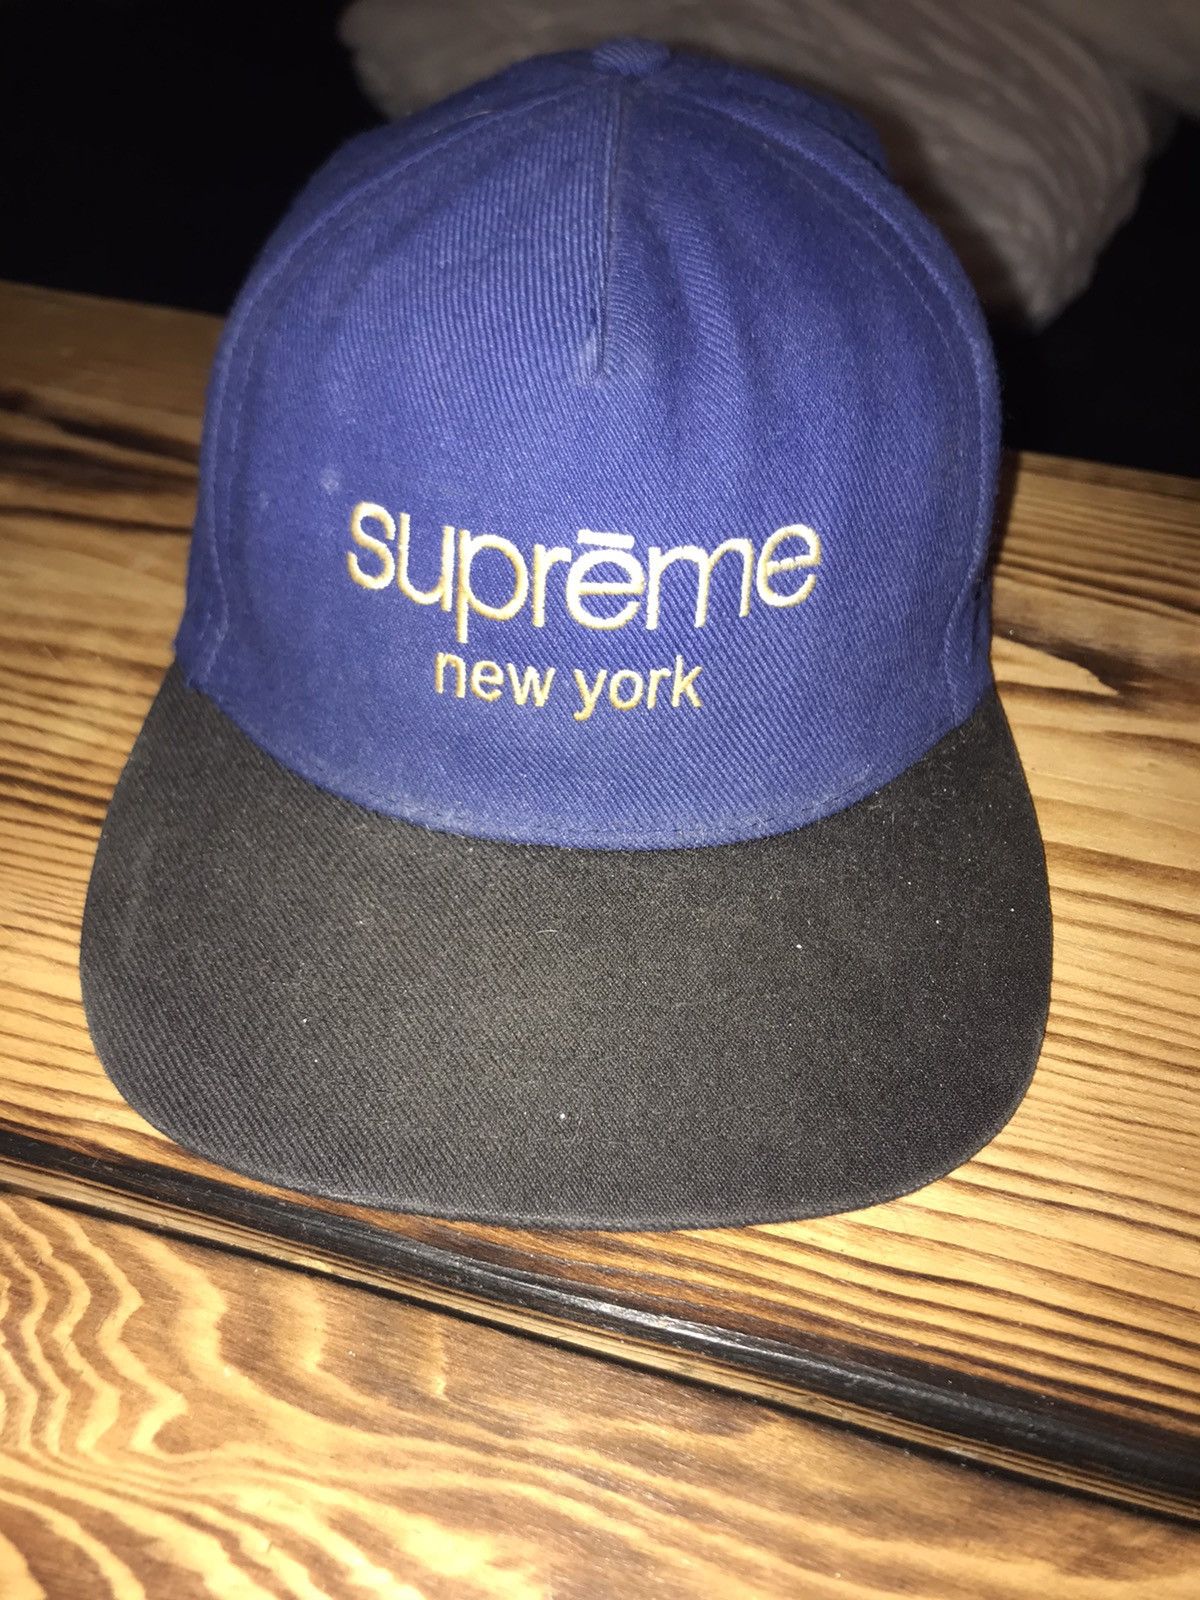 Supreme Supreme New York logo SnapBack hat | Grailed